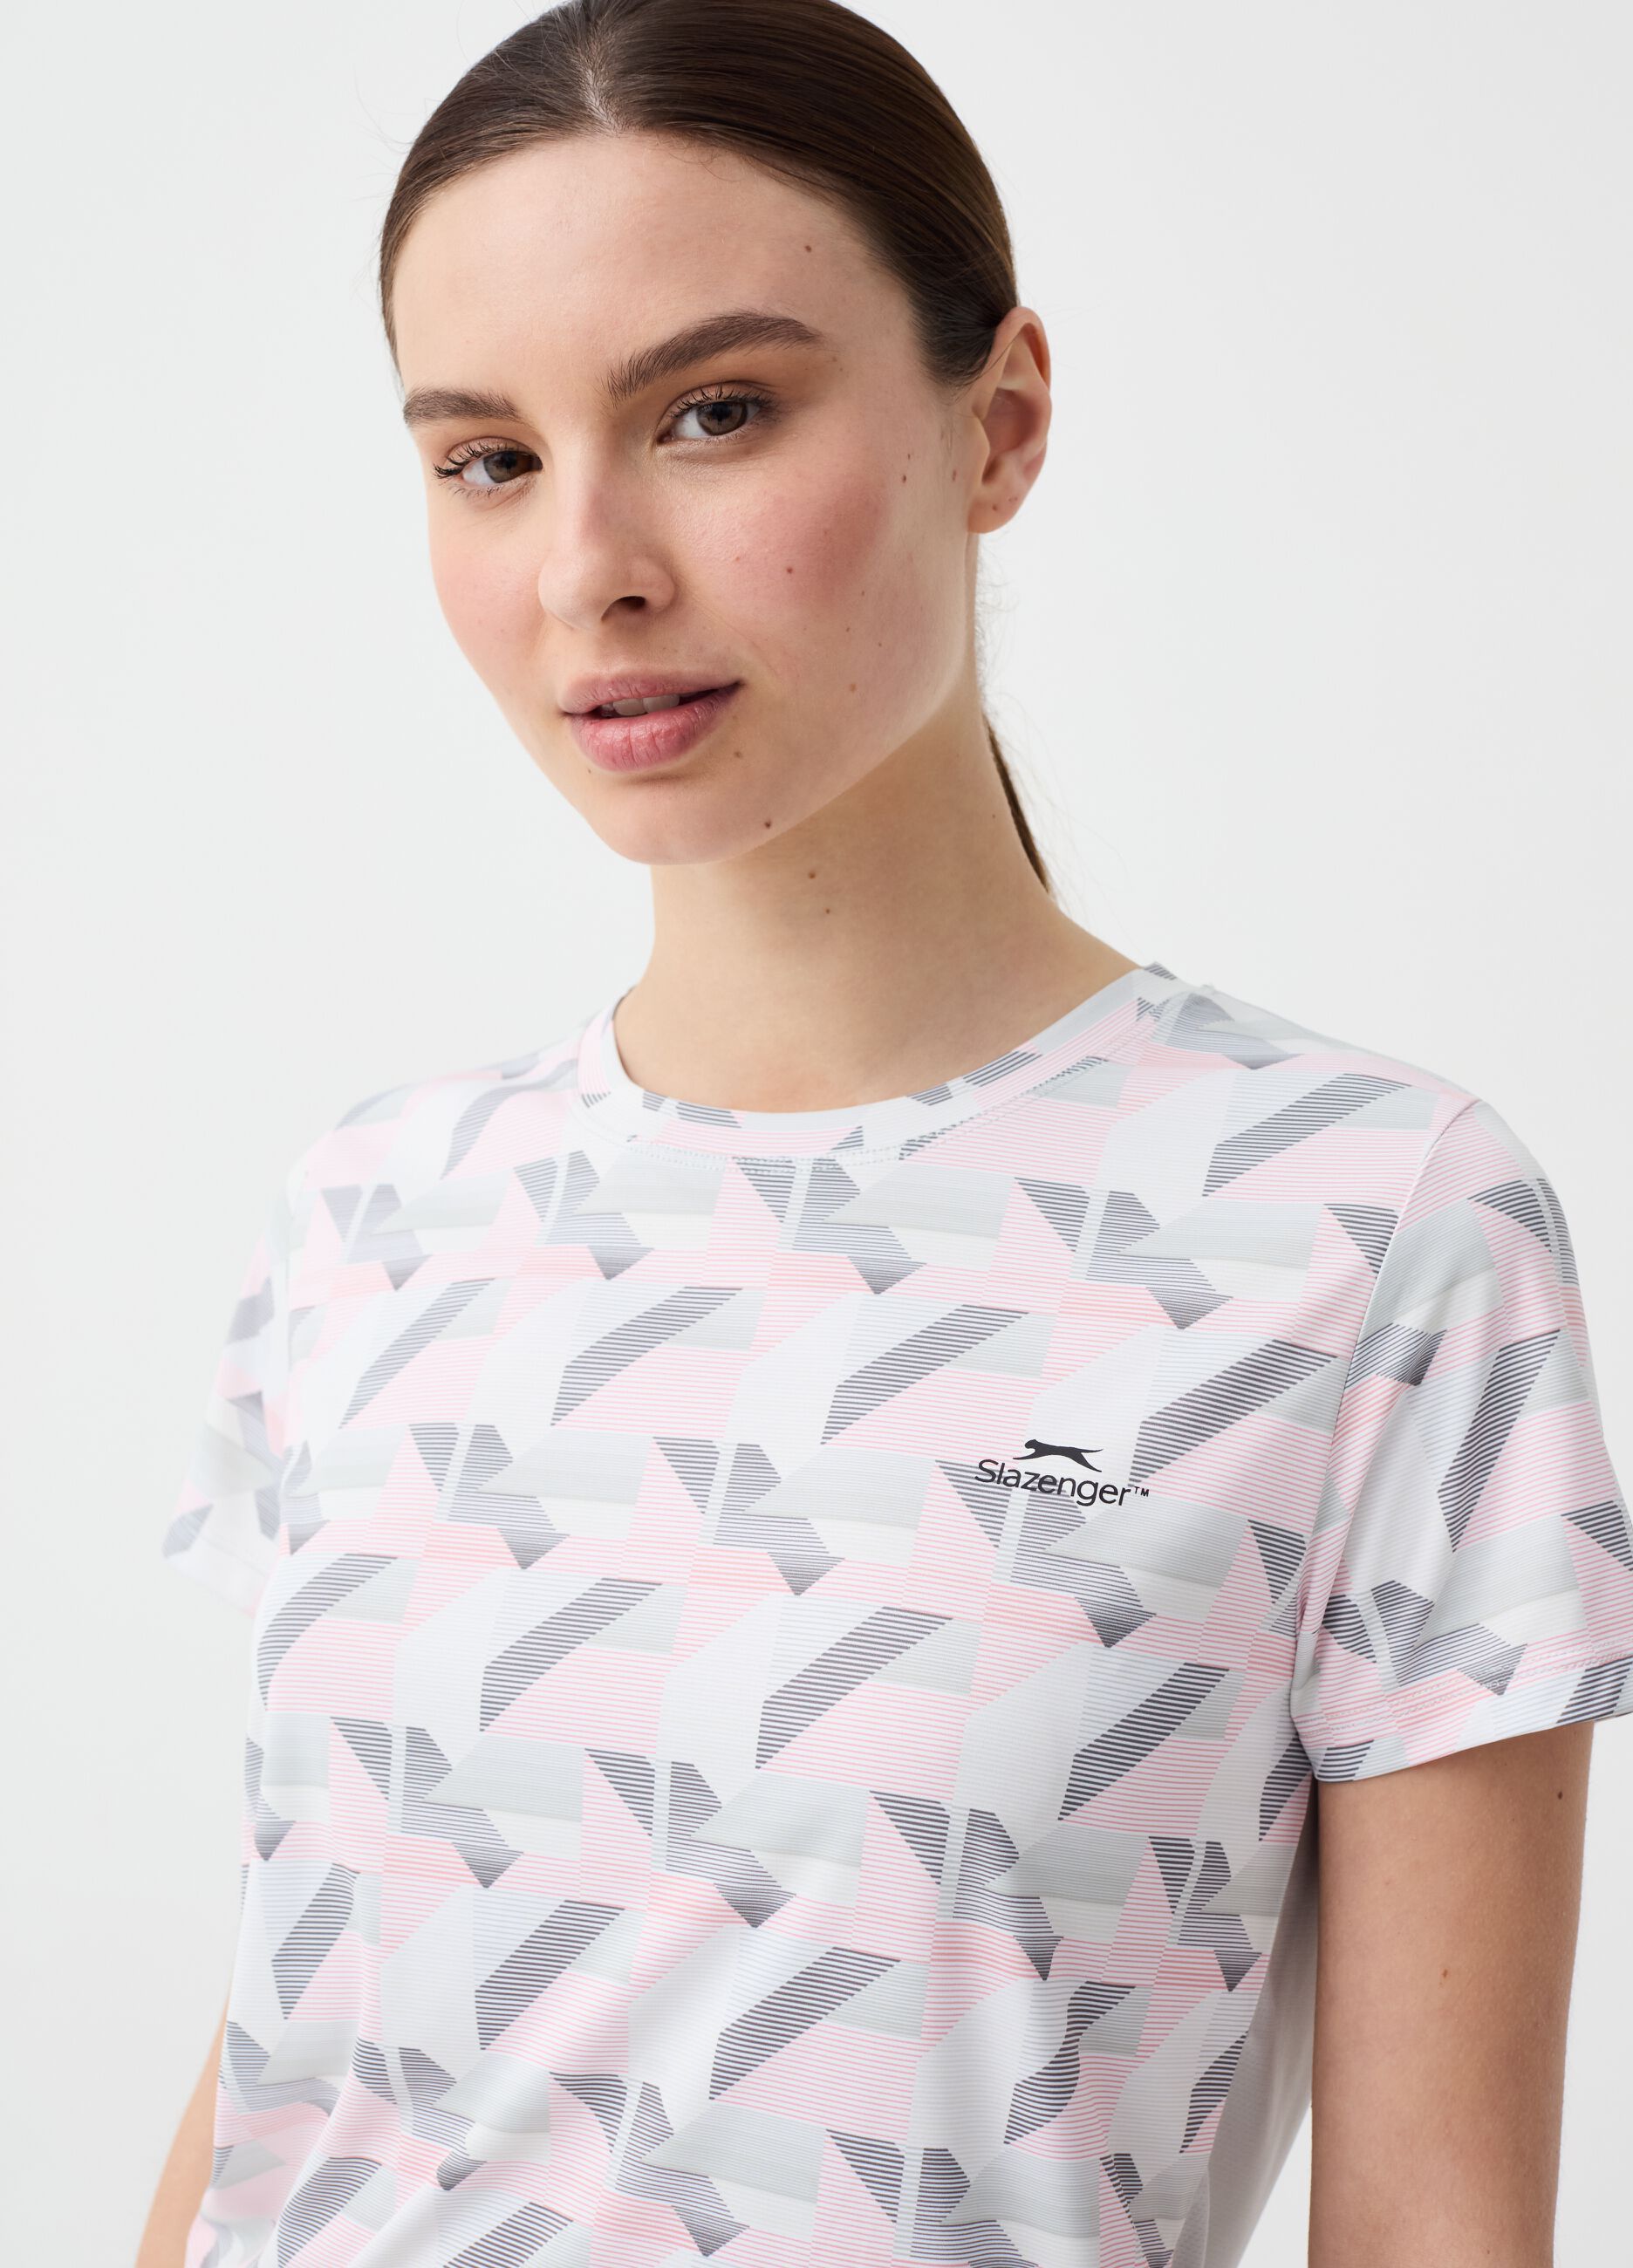 Slazenger tennis T-shirt with print